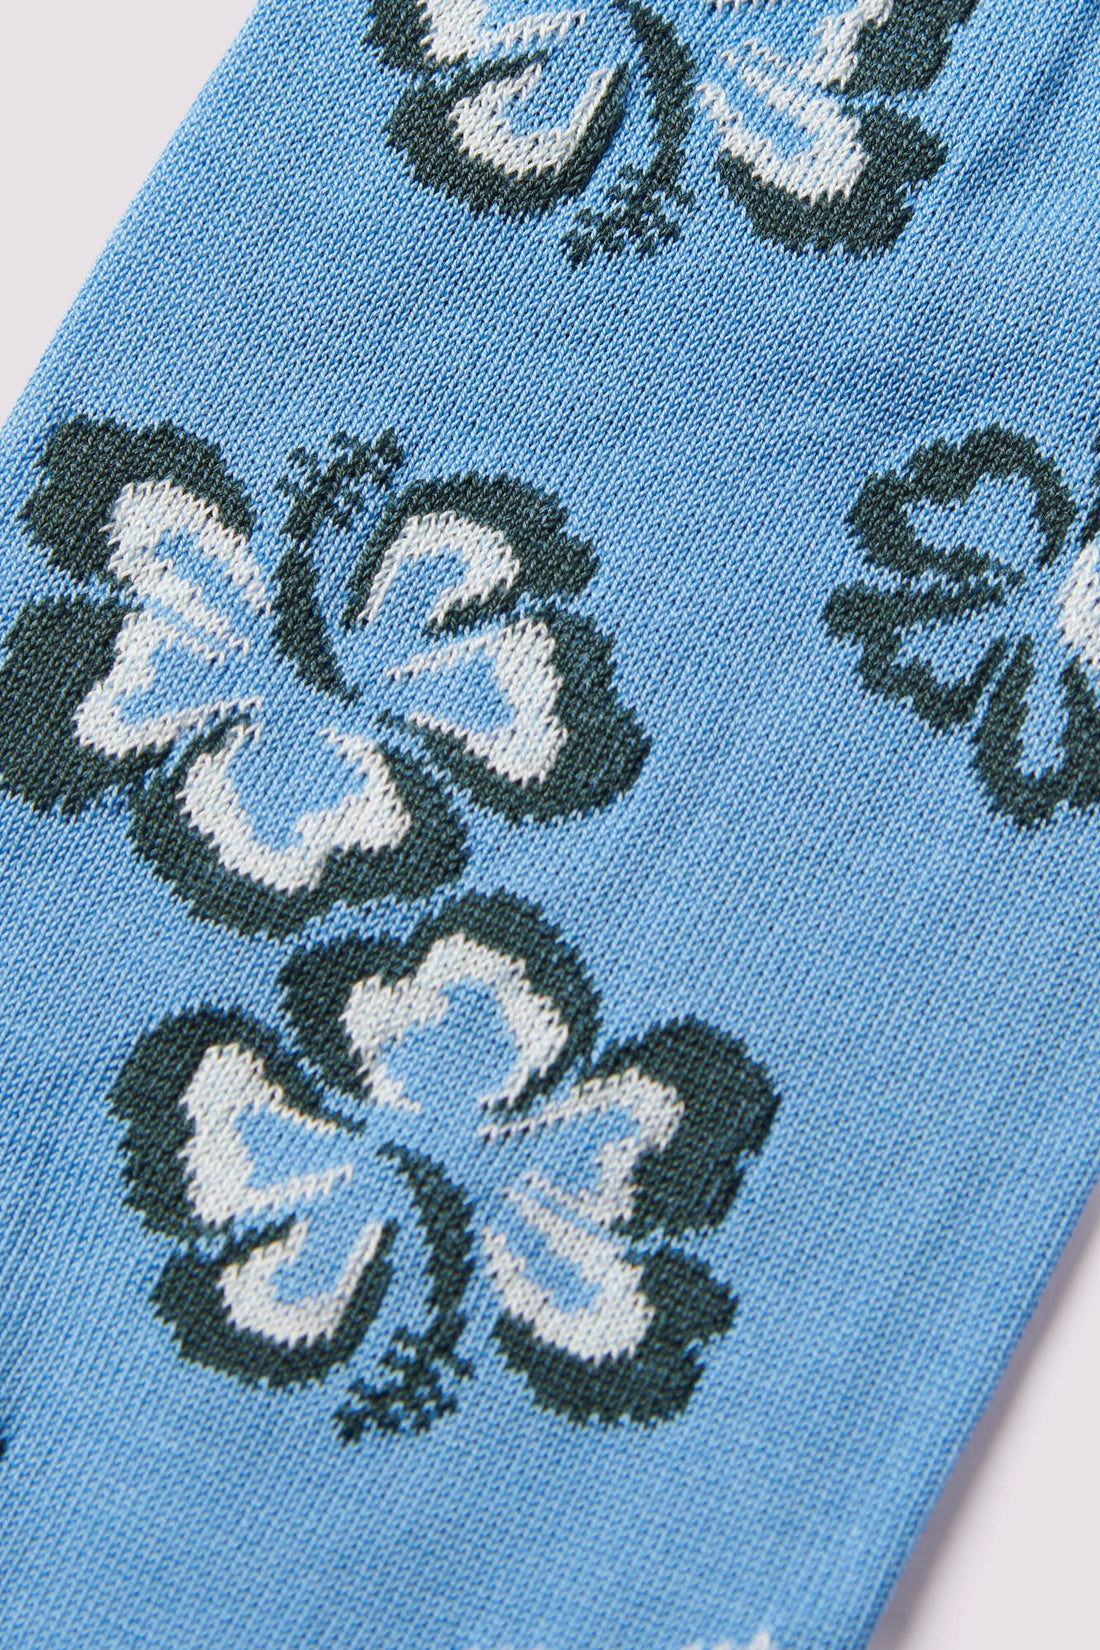 Hibiscus Floral Socks in Pale Blue